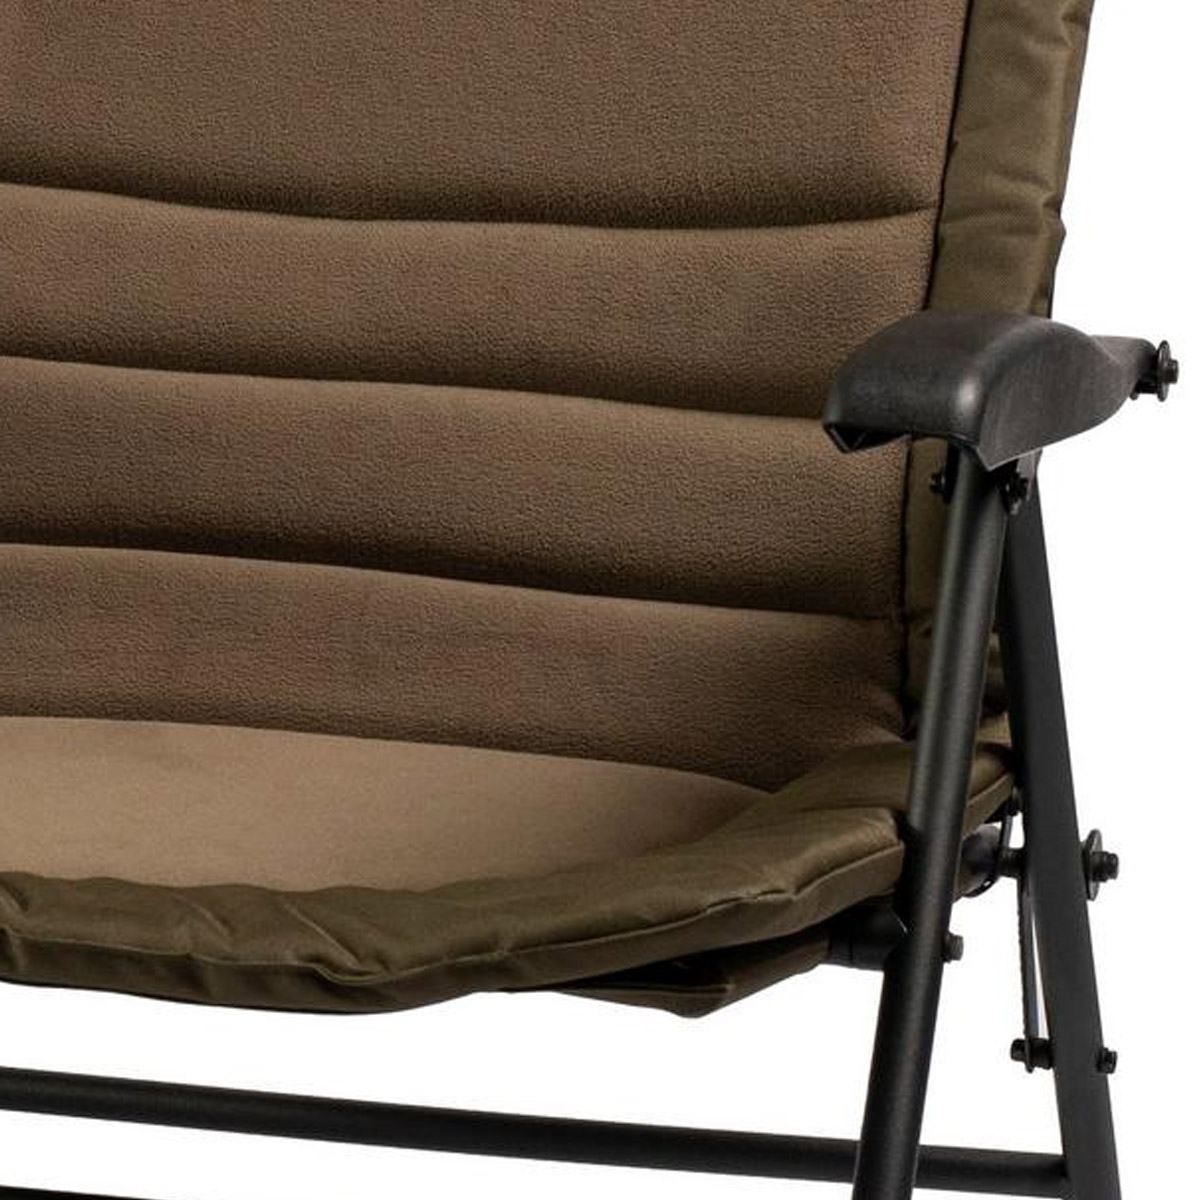 JRC Defender II Relaxa Hi-Recliner Arm Chair